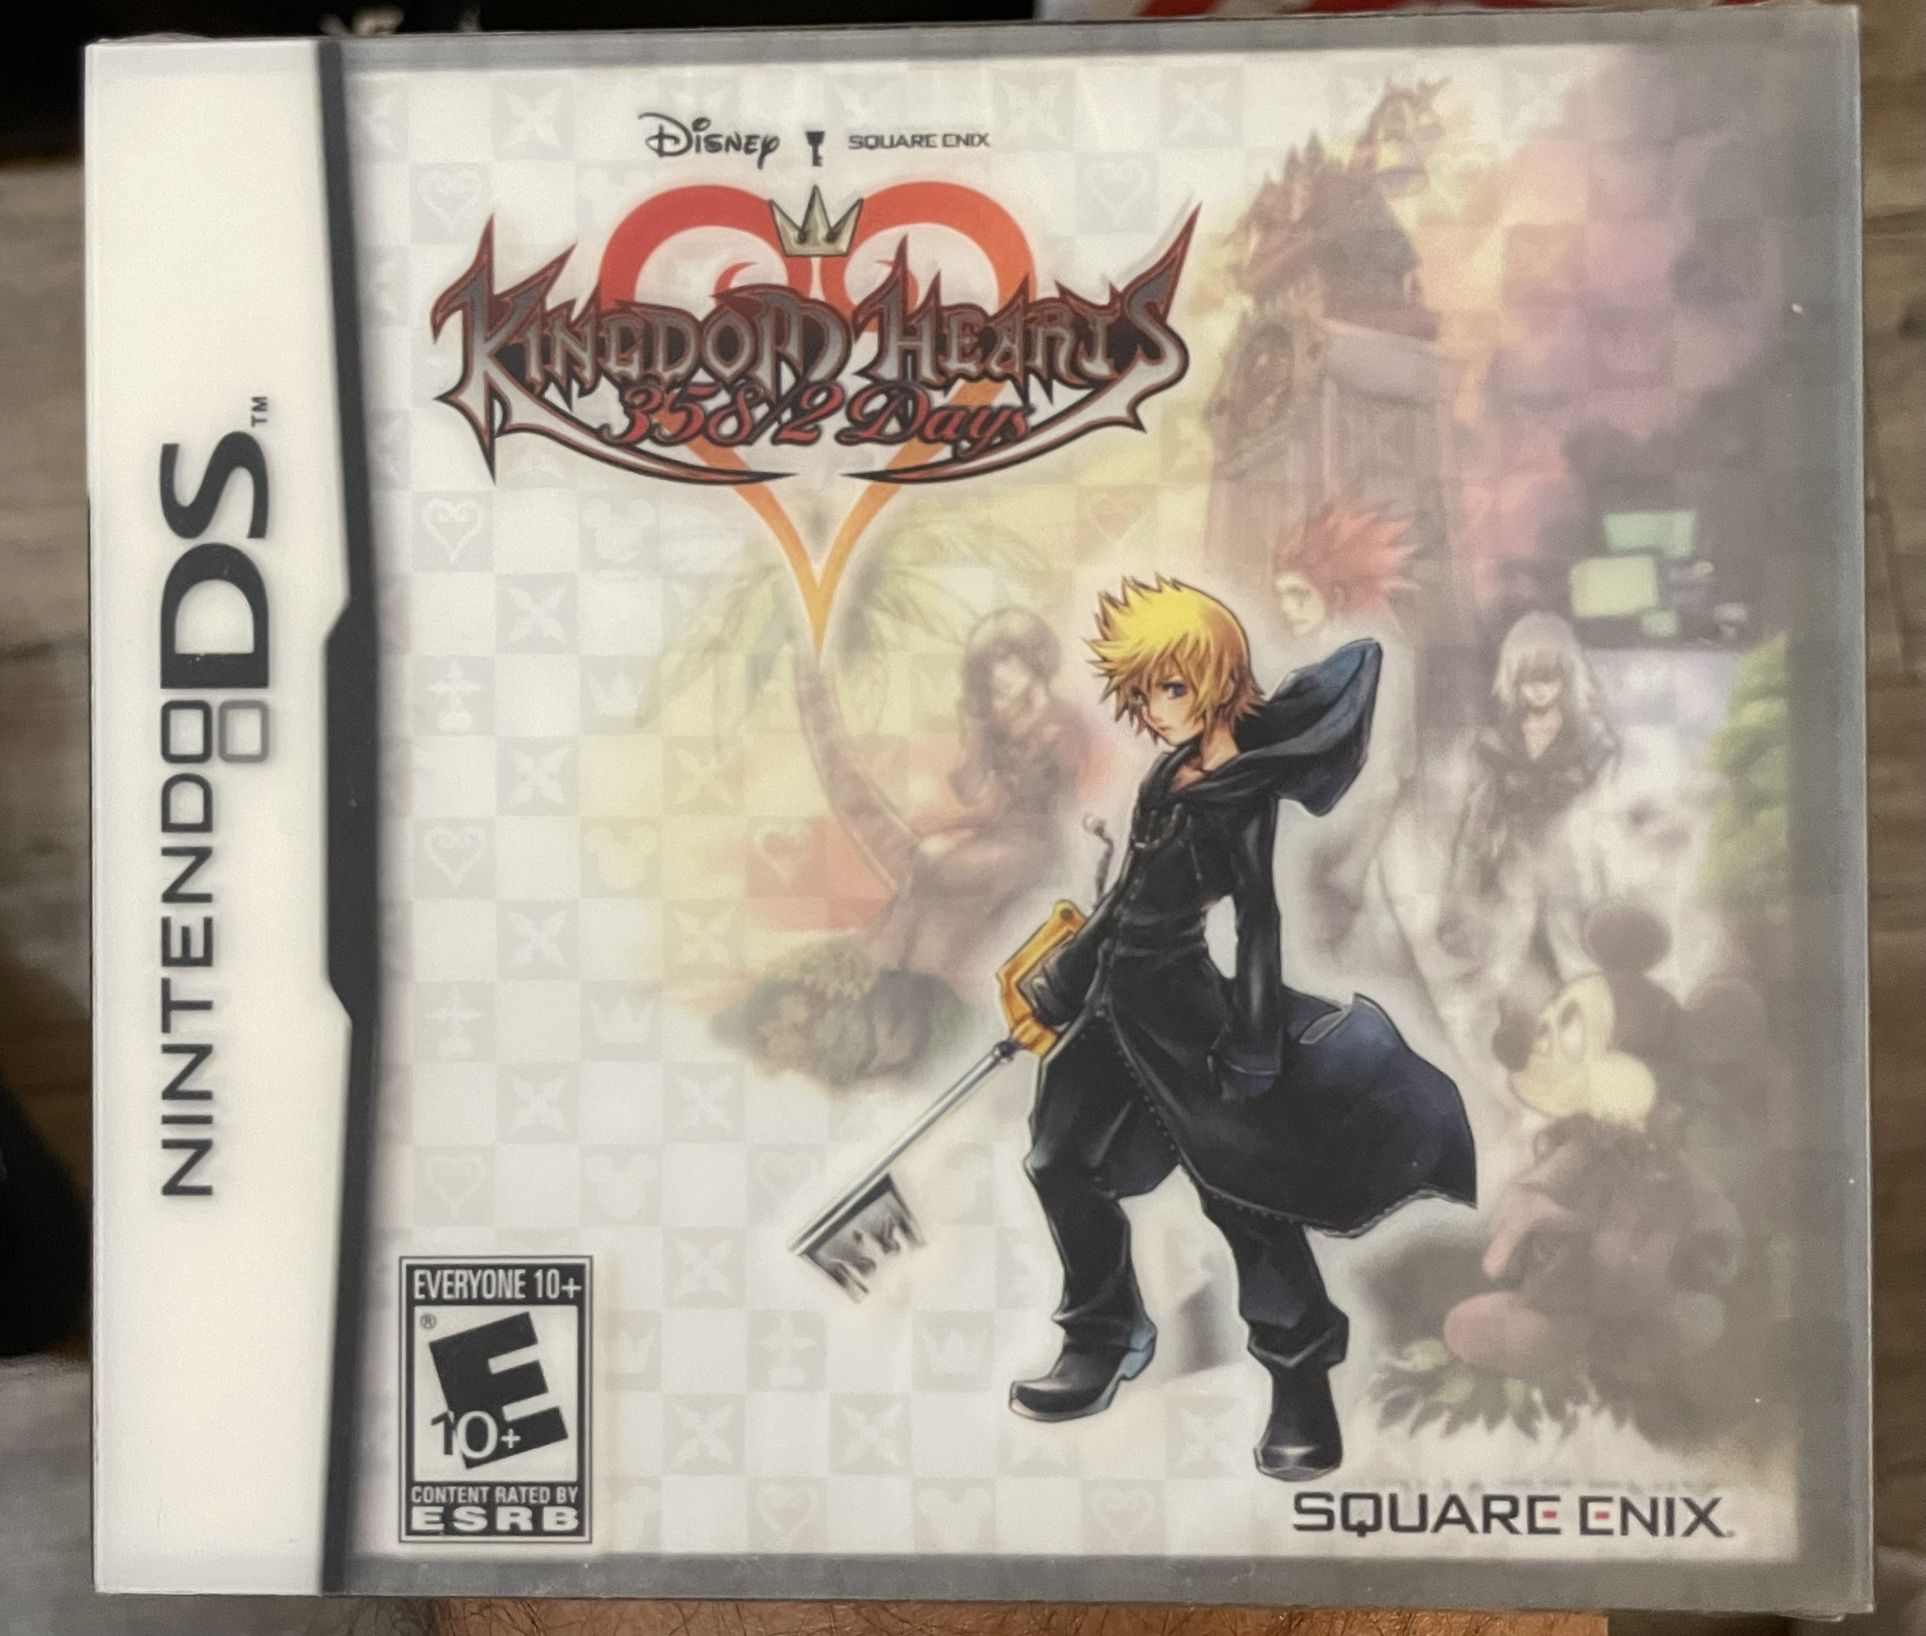 Nintendo DS. Kingdom Heart: 358/2 Days. BRAND NEW FACTORY SEALED. $120.00 OBO